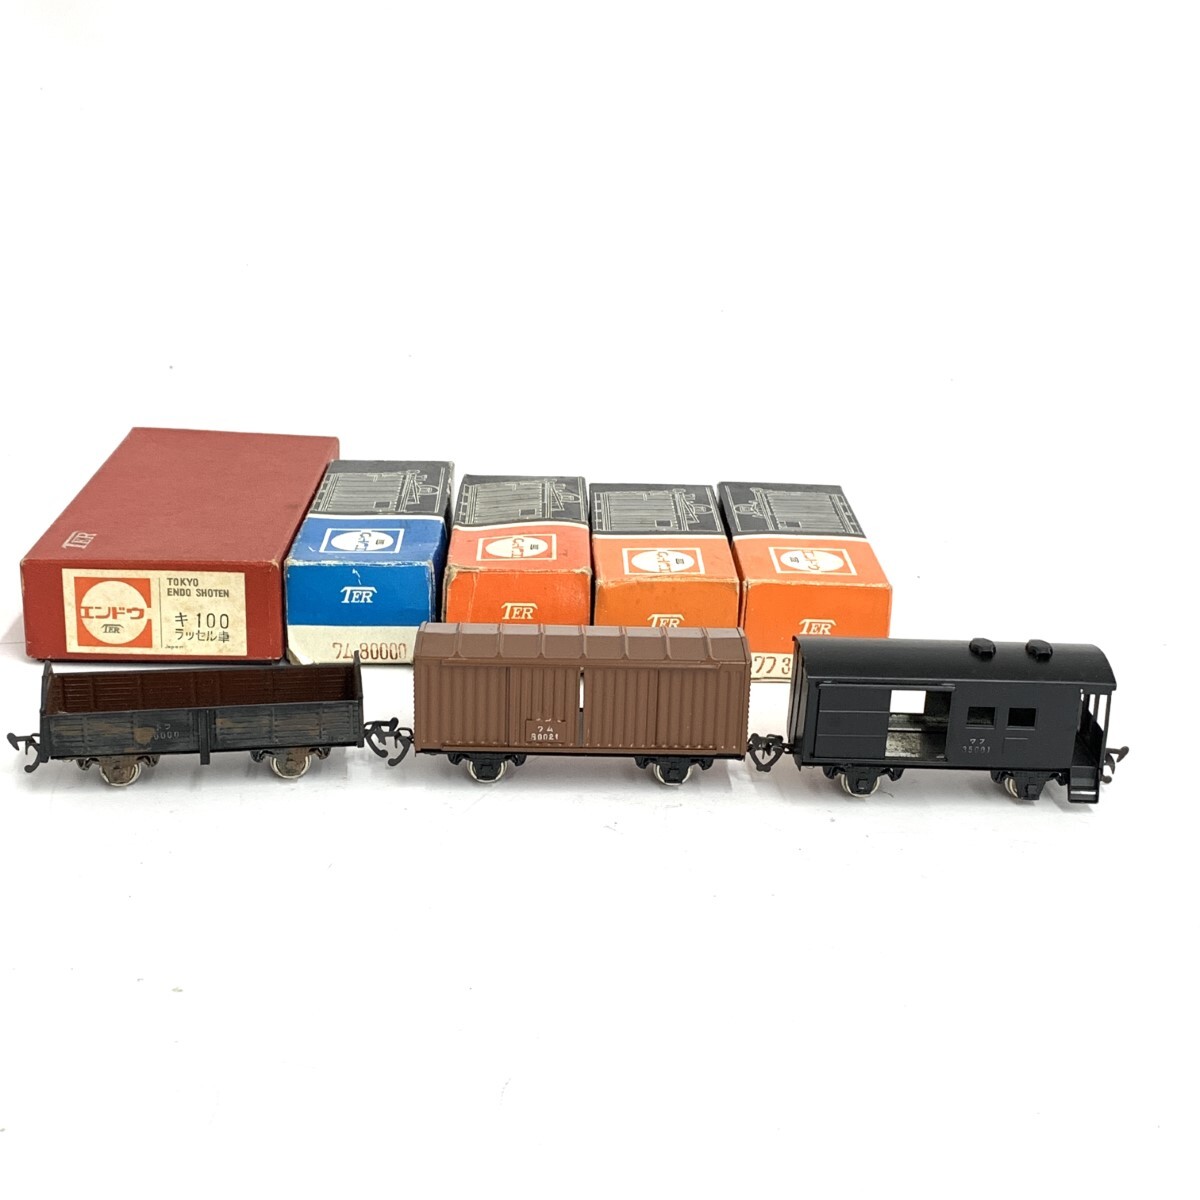  junk *TER end u russell car railroad model *ki100&wam90000/waf35000/ tiger 45000/wam80000 black collection hobby train 